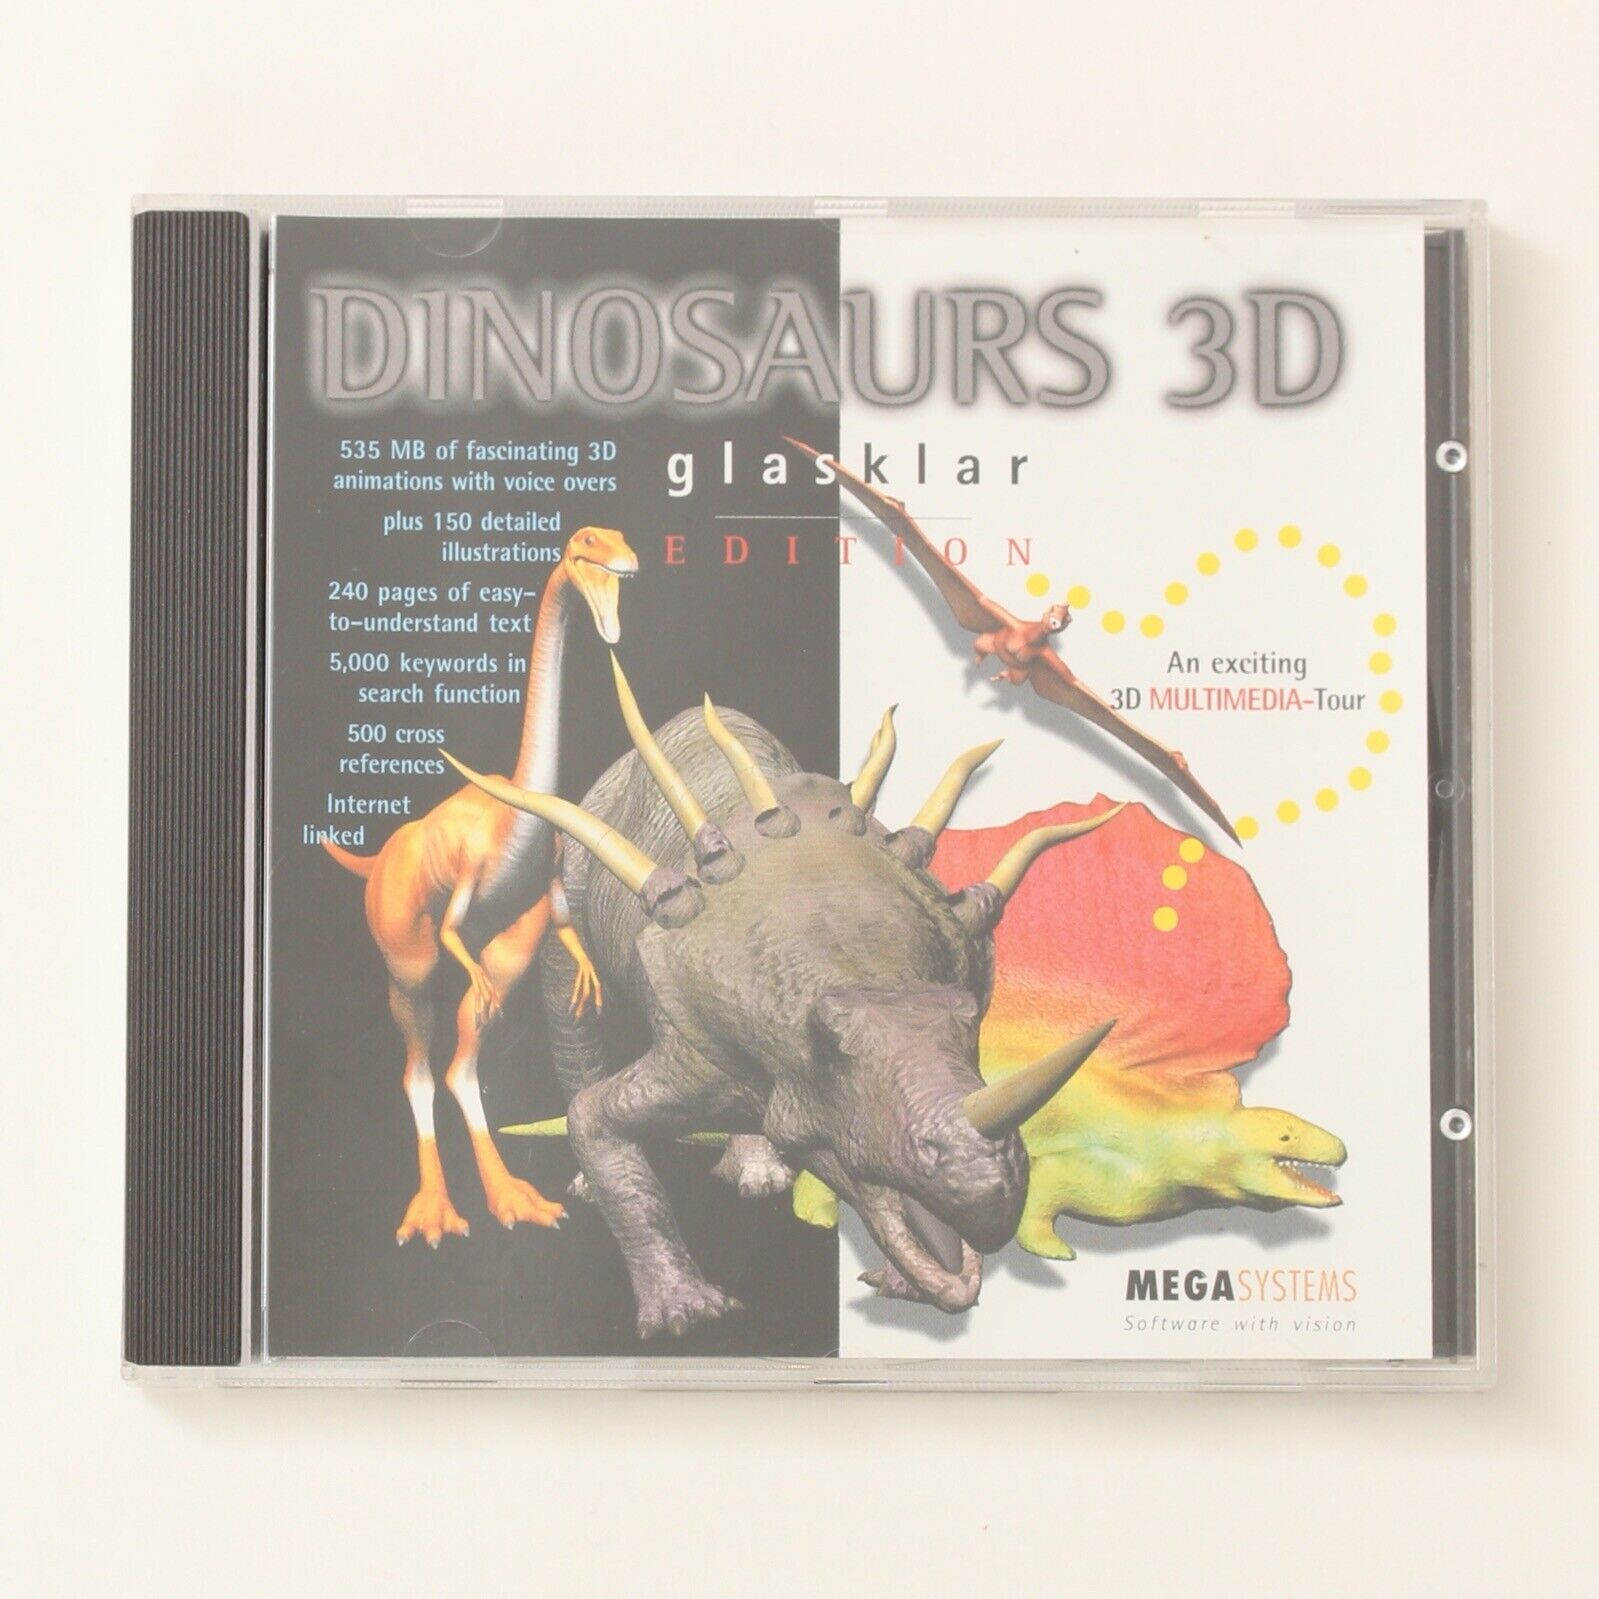 Dinosaurs 3D (Glasklar Edition) Vintage CD-ROM PC Software for Windows 95